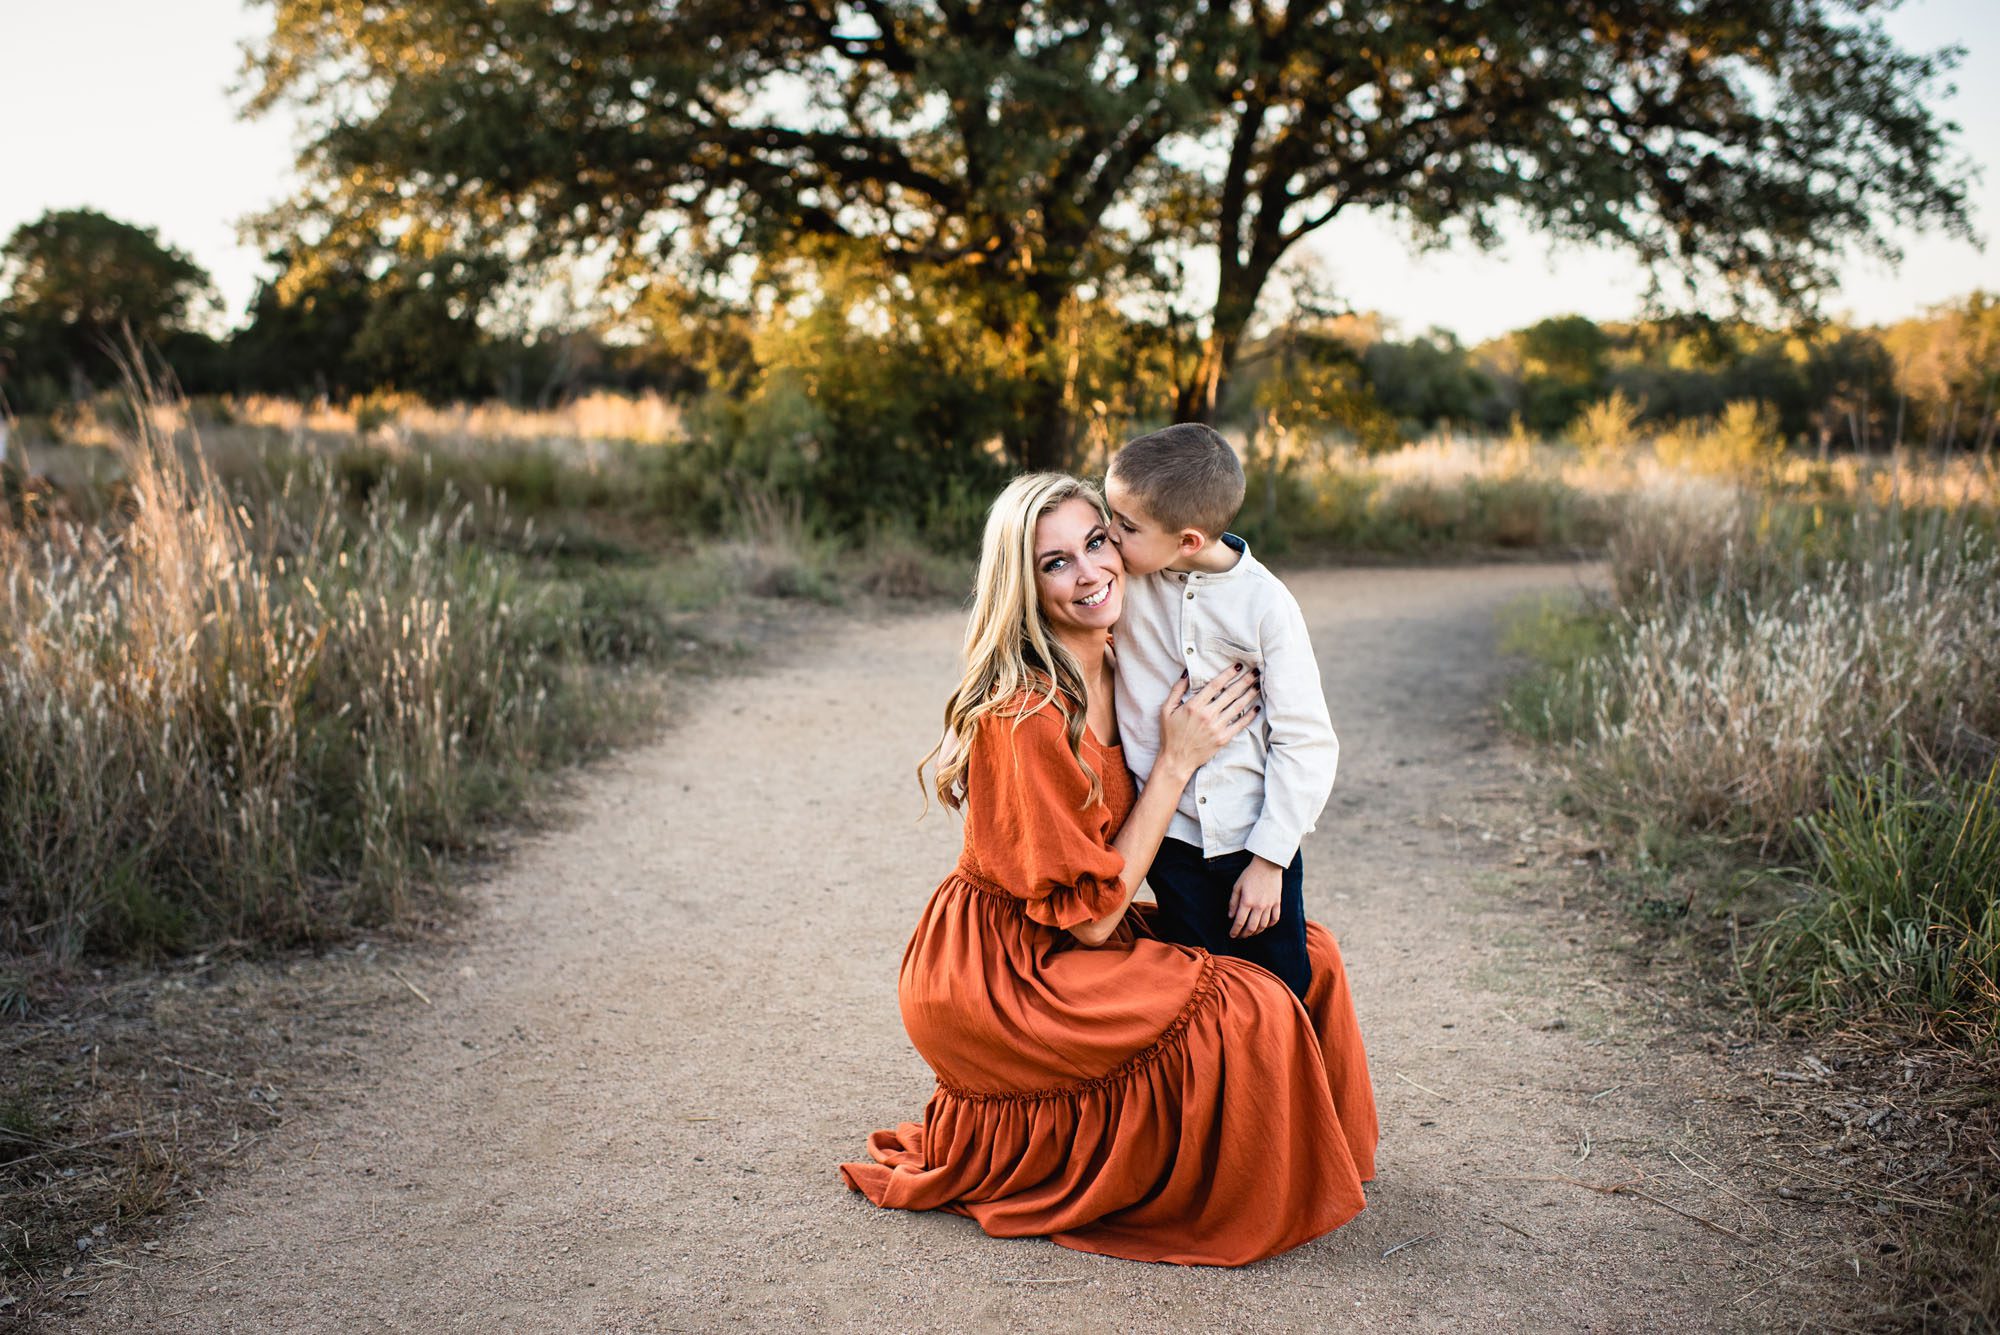 Son kissing mother's cheek, San Antonio lifestyle photographer